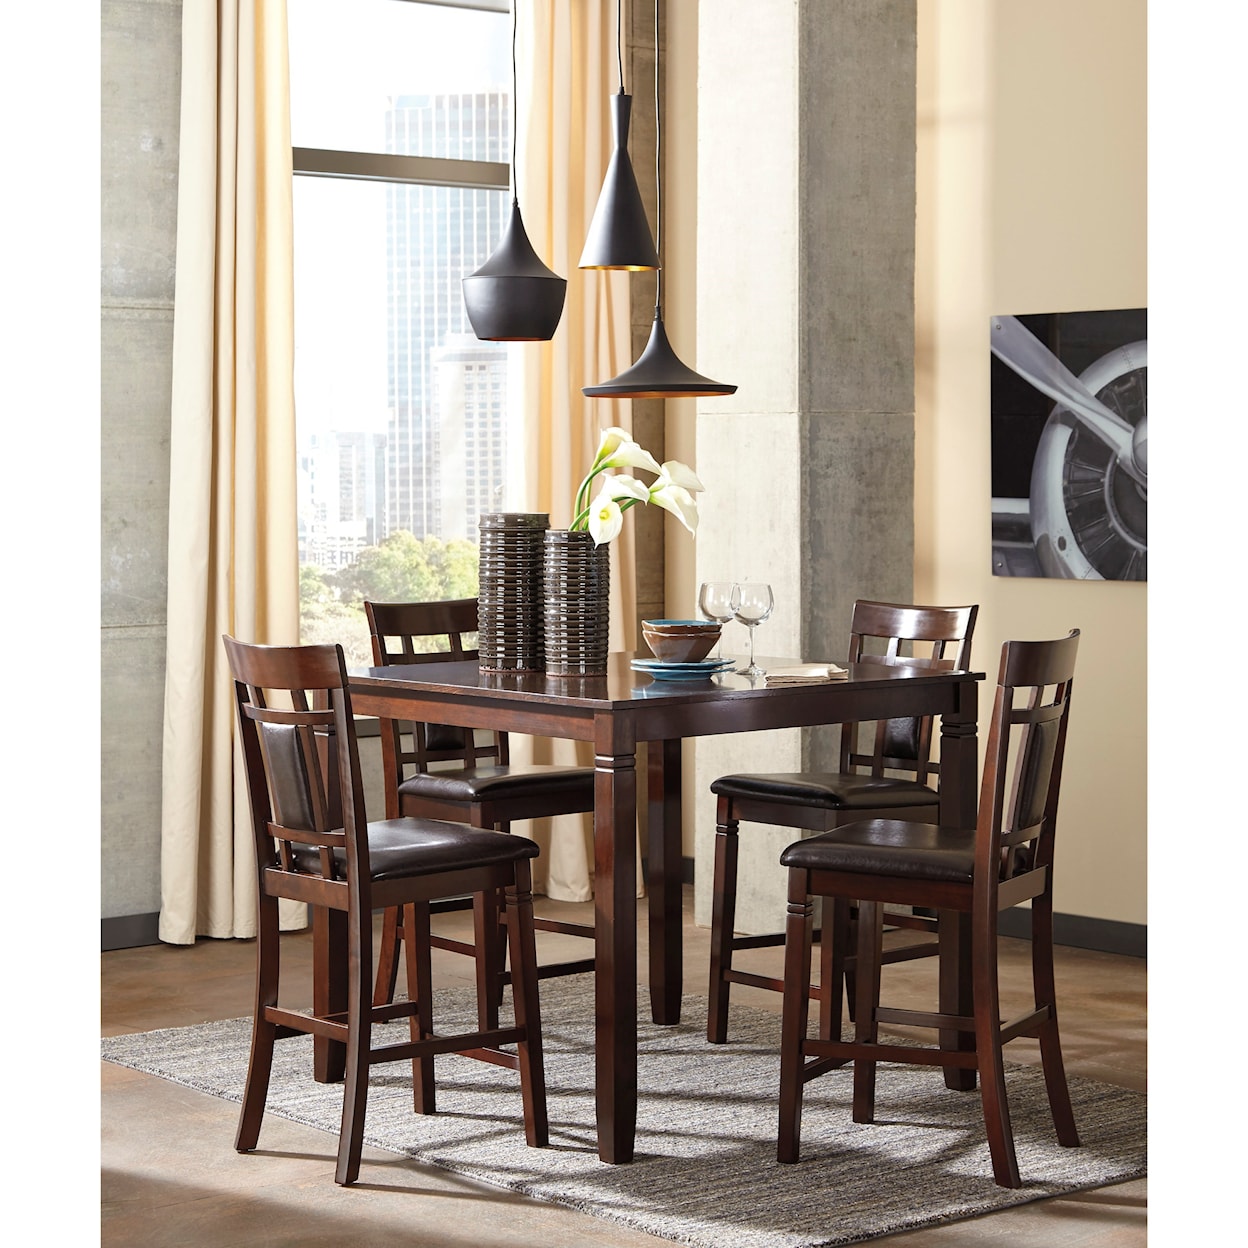 Ashley Furniture Signature Design Bennox 5-Piece Dining Room Counter Table Set